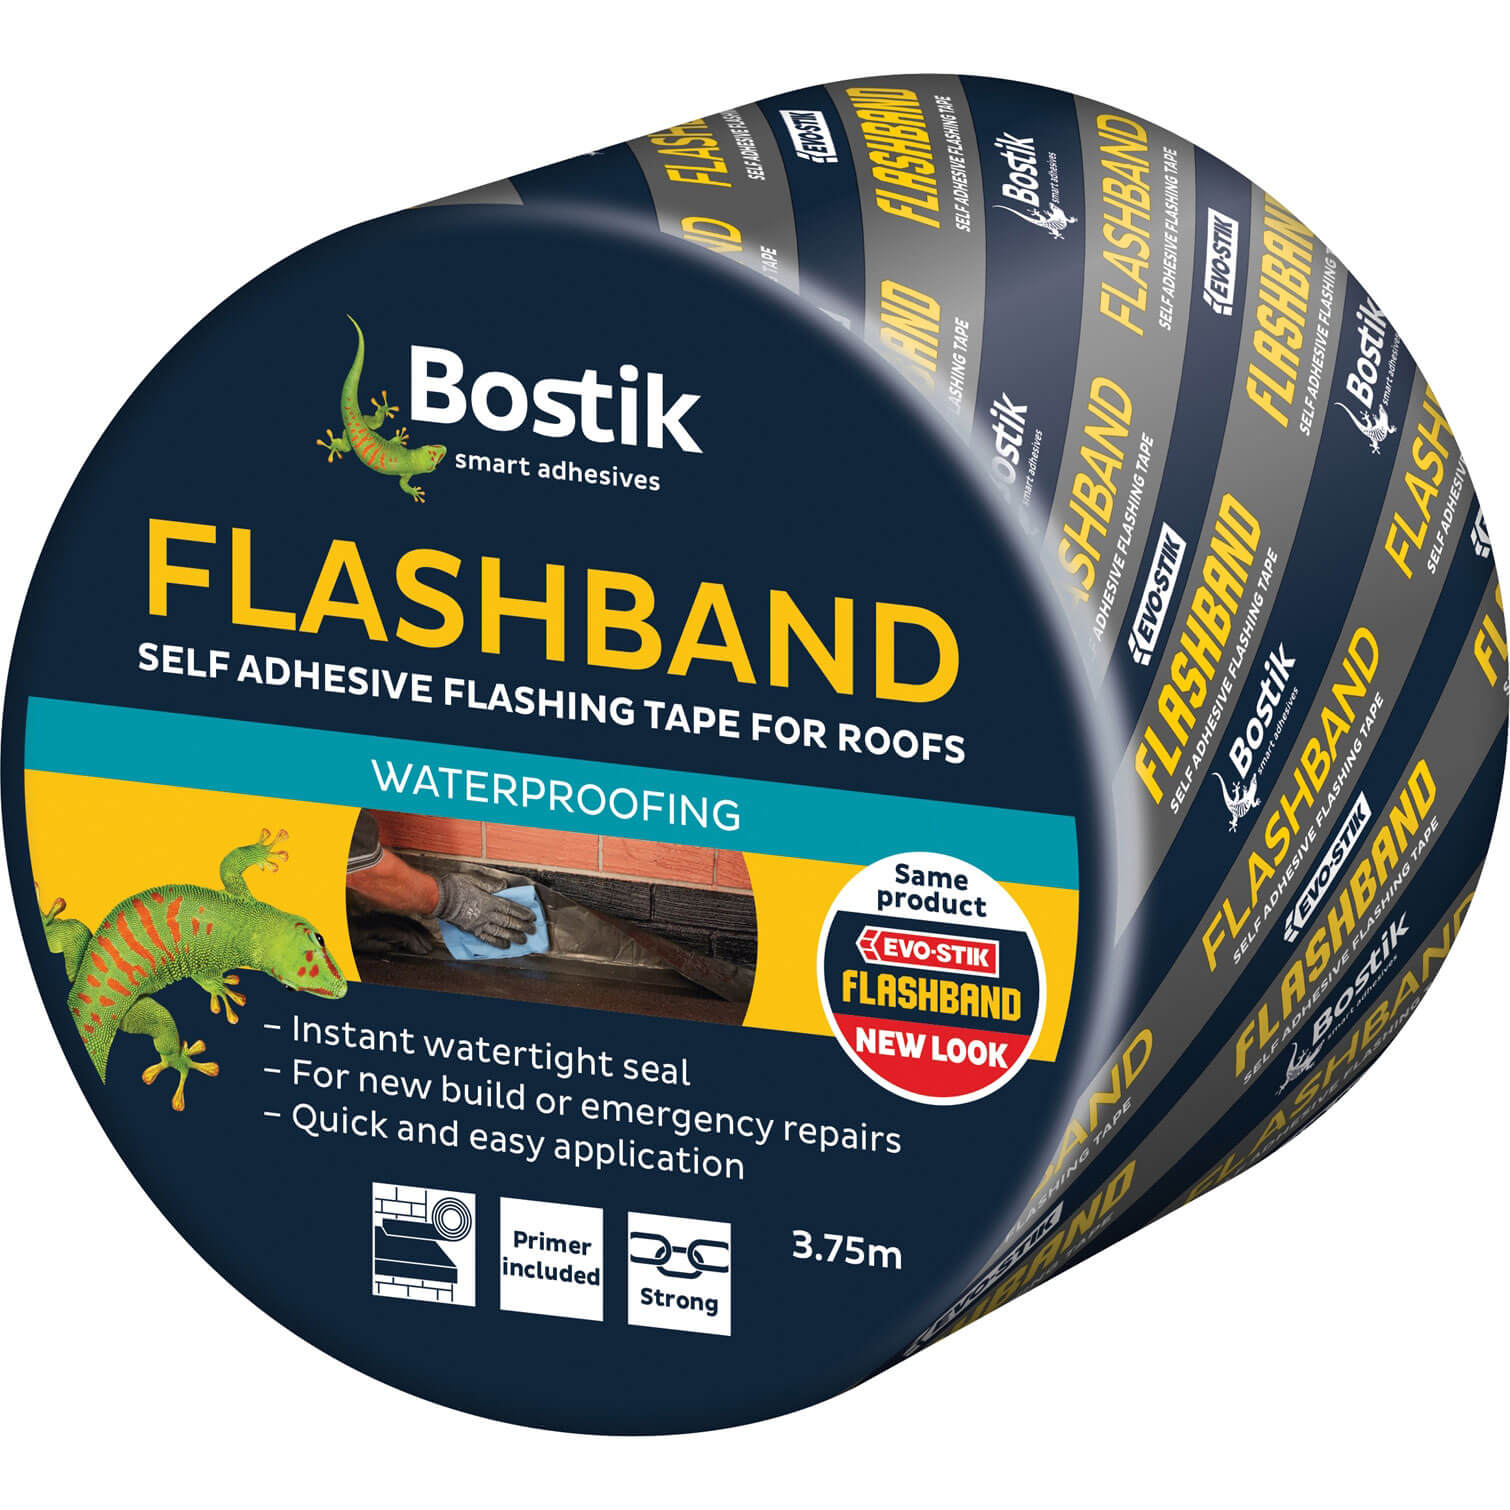 Image of Evo-stik Flashband and Primer 225mm 3.75m